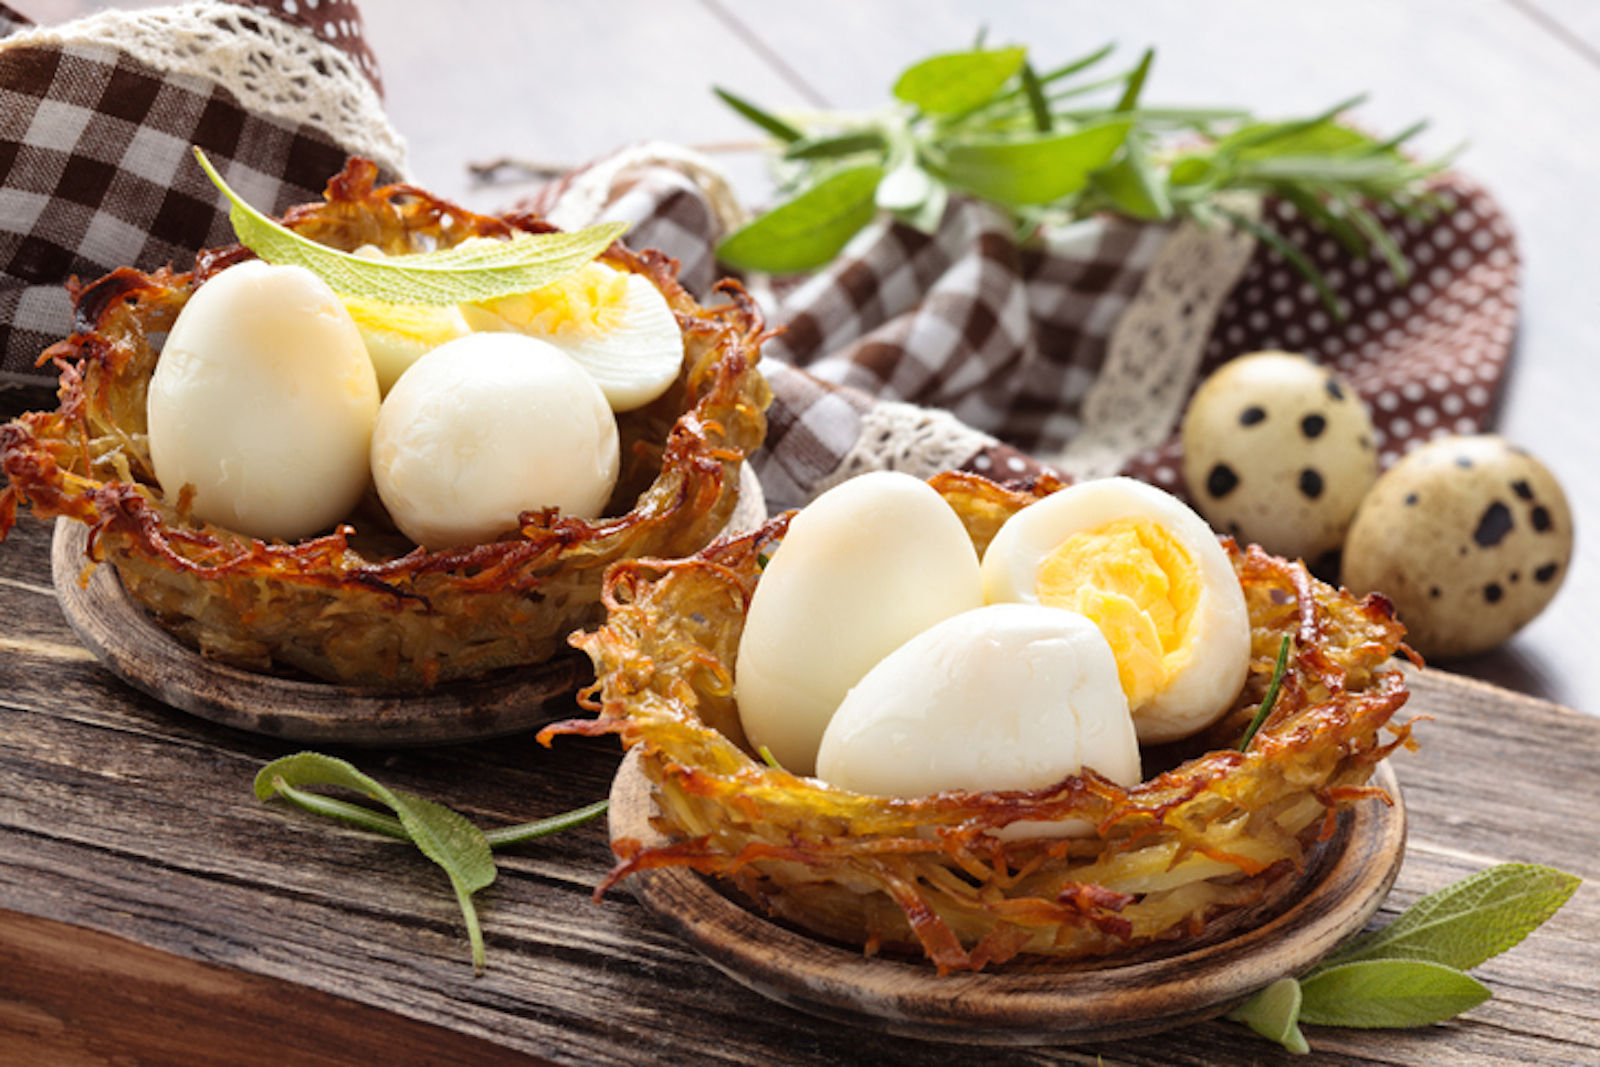 three fun and original recipes to make with potatoes and eggs